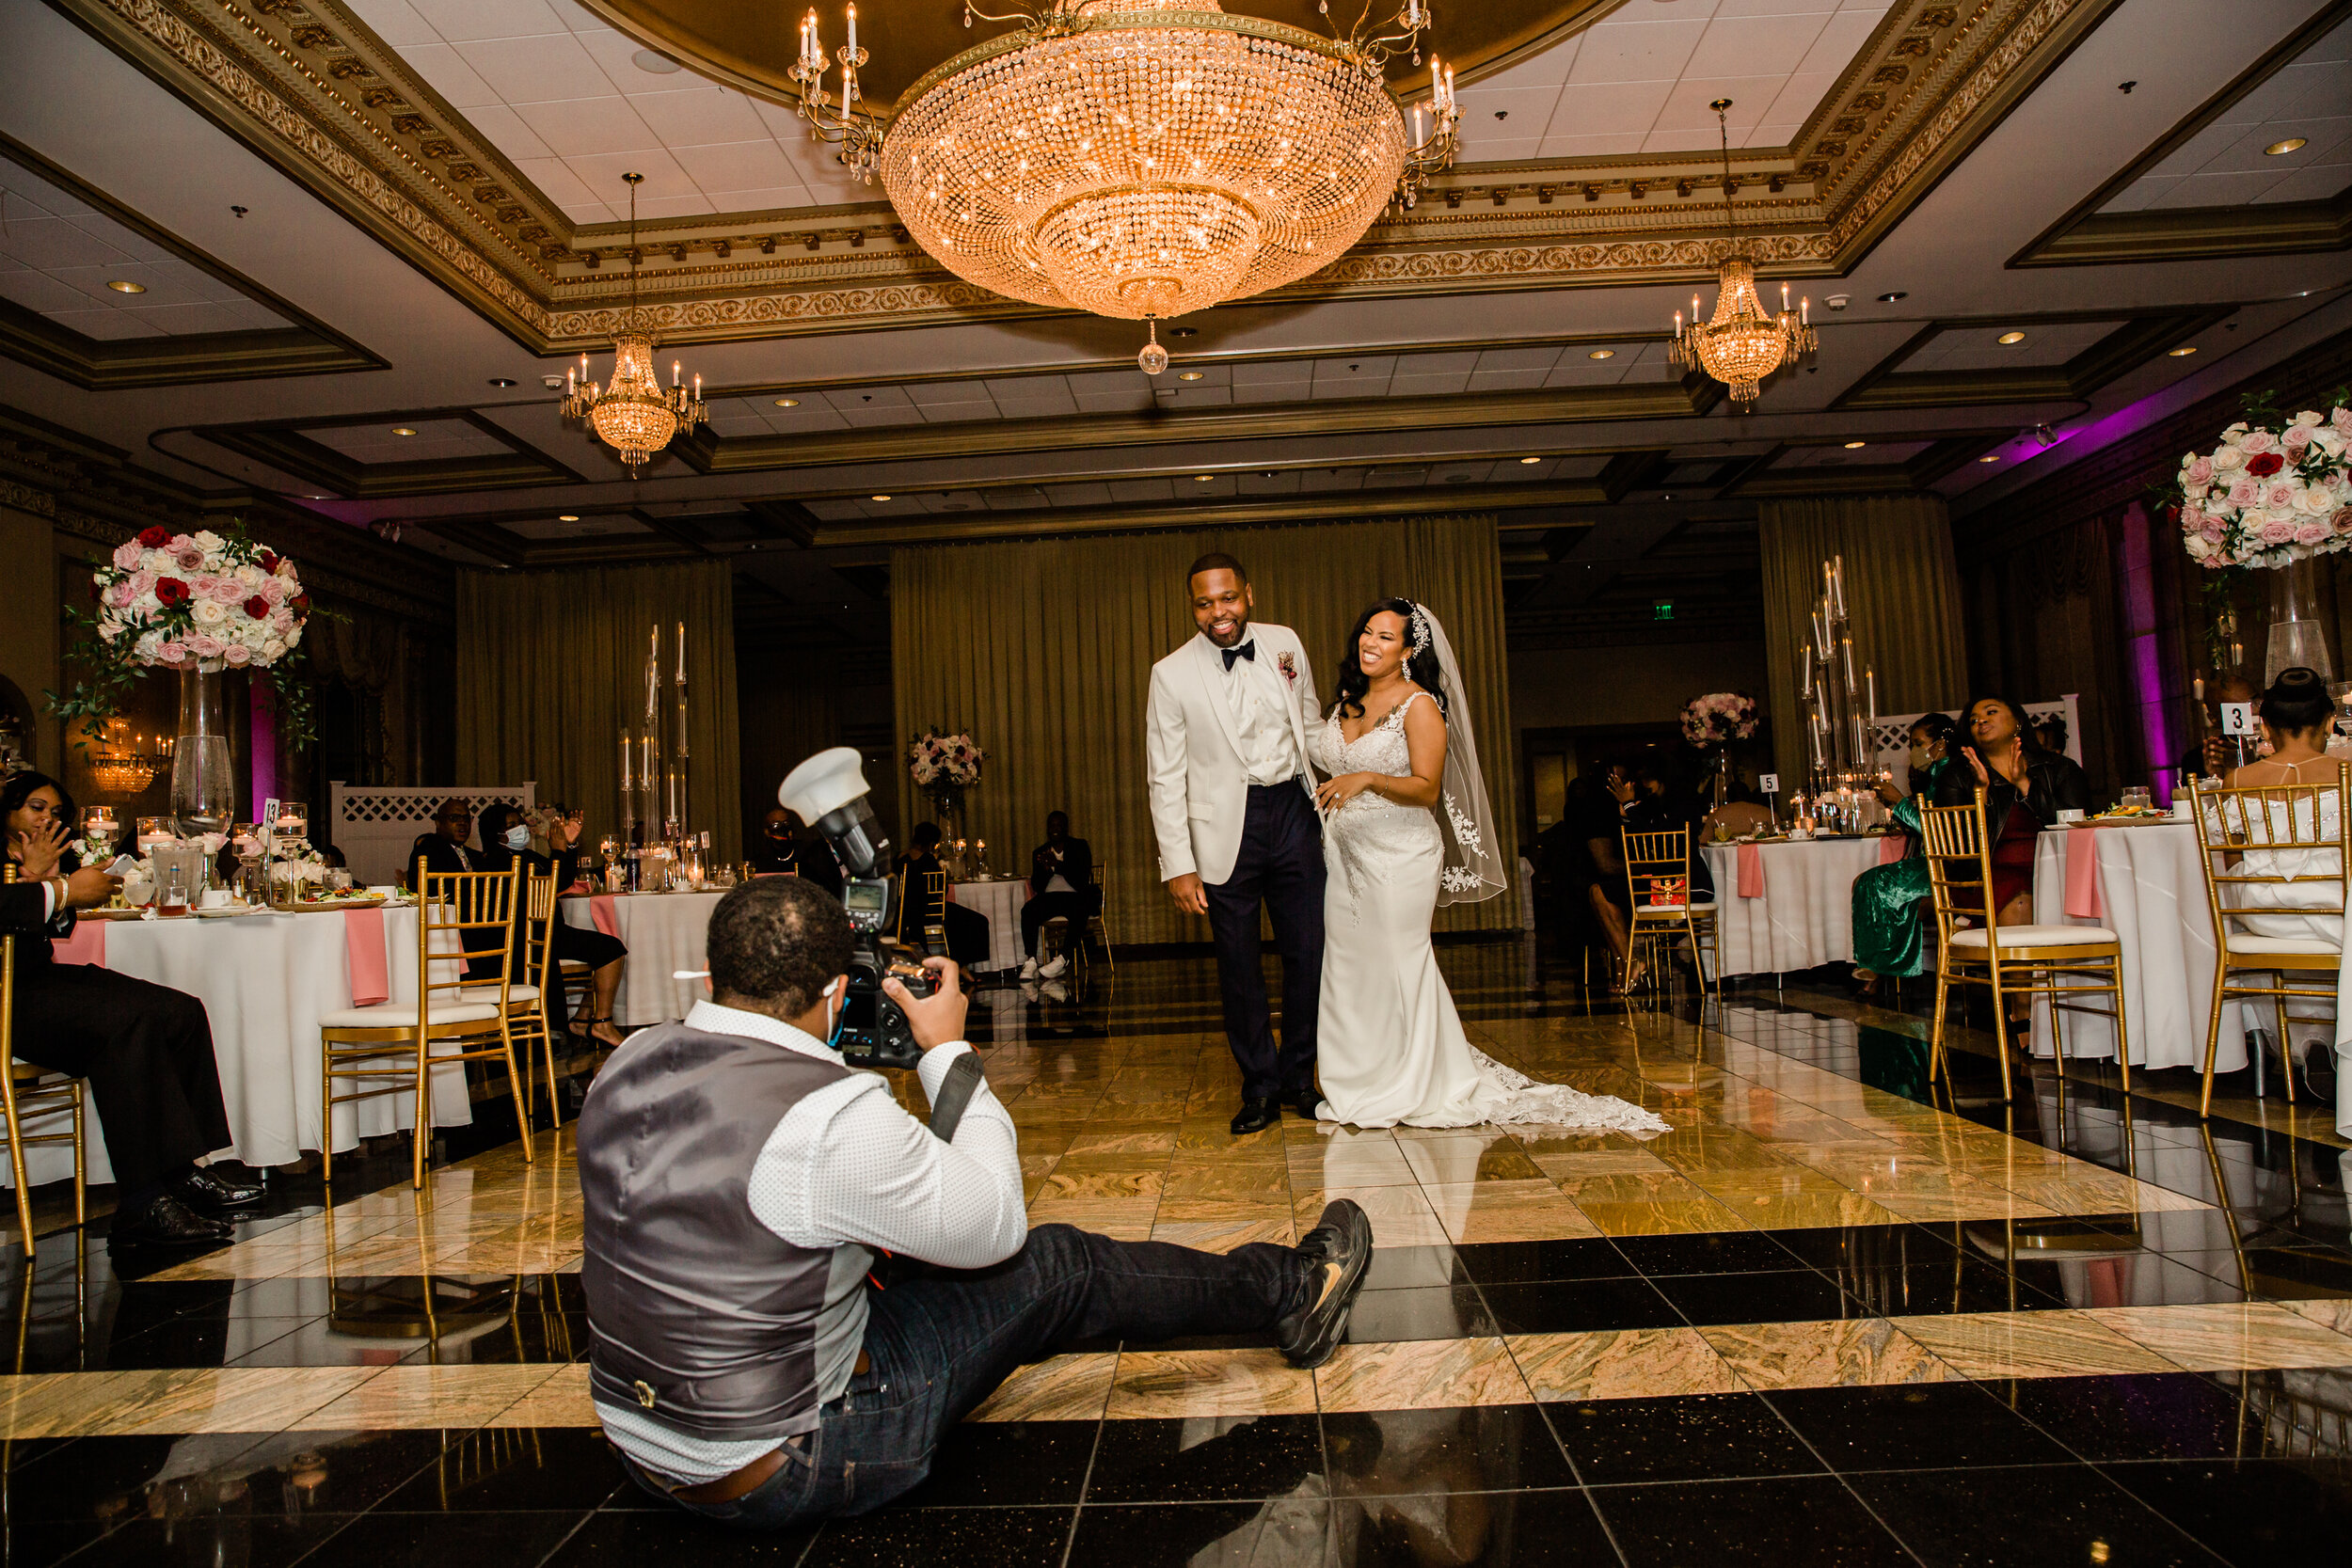 Baltimore Luxury Wedding Photographer Megapixels Media Martins Valley Mansion Black Bride-97.jpg